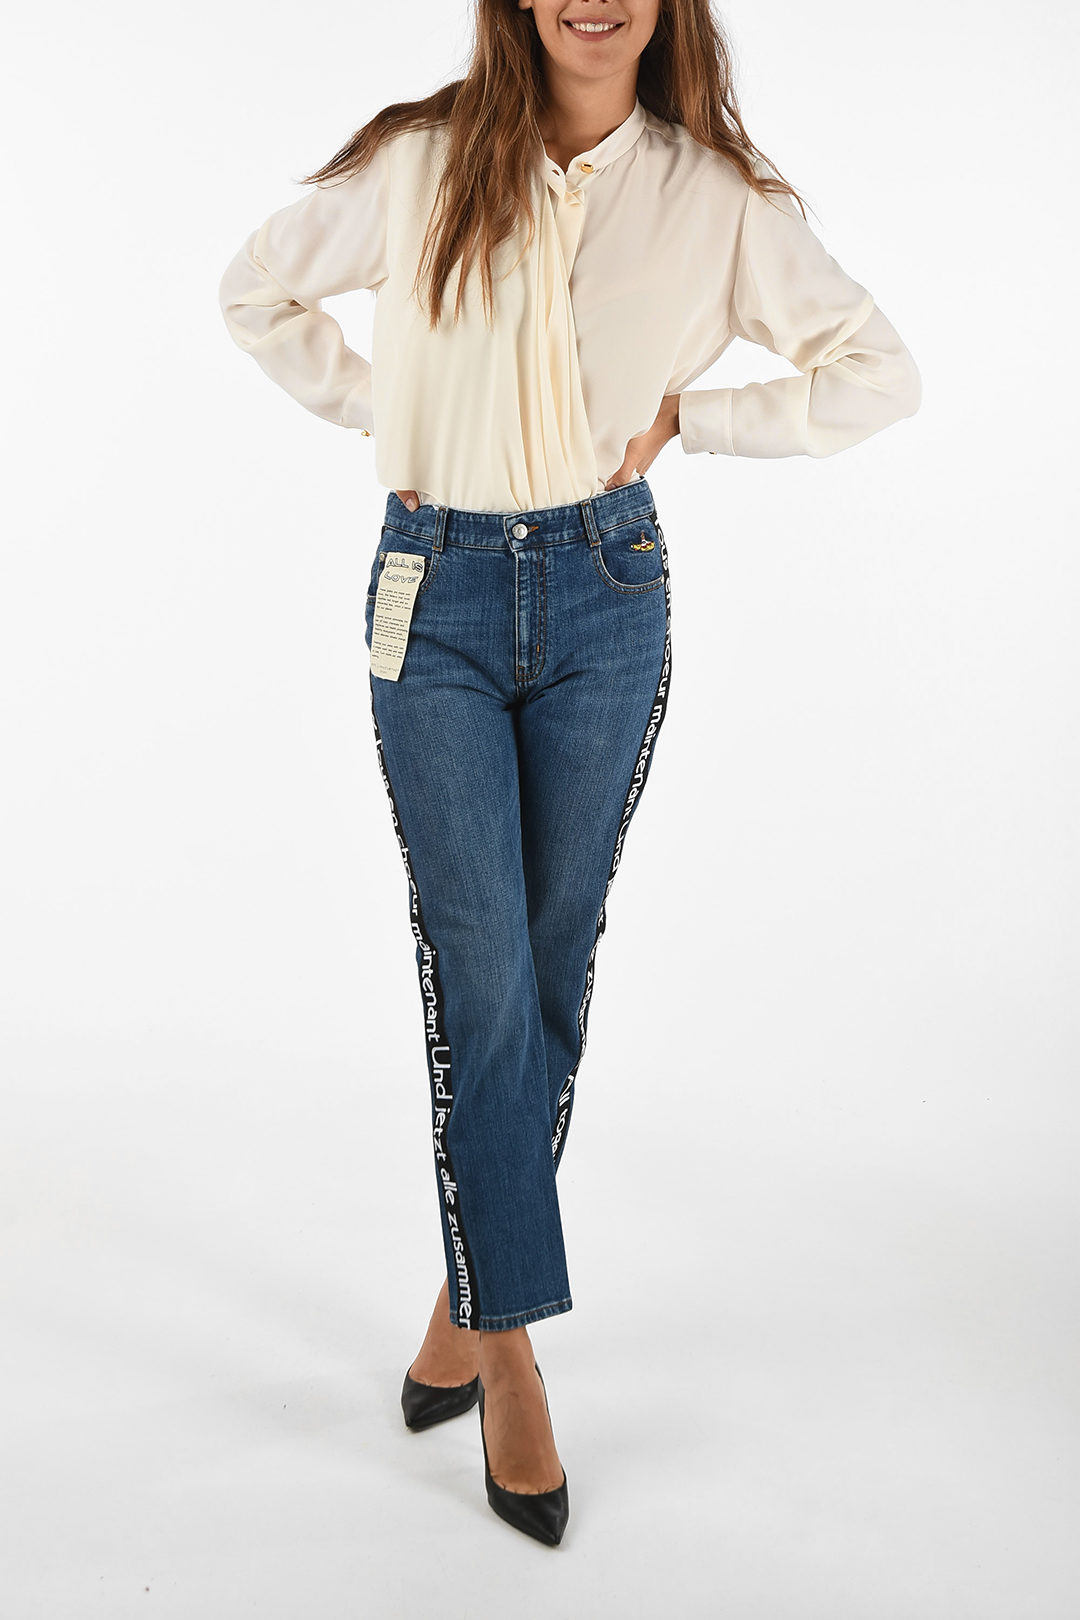 Stella McCartney THE BEATLES Stretch denim piping jeans women - Glamood ...